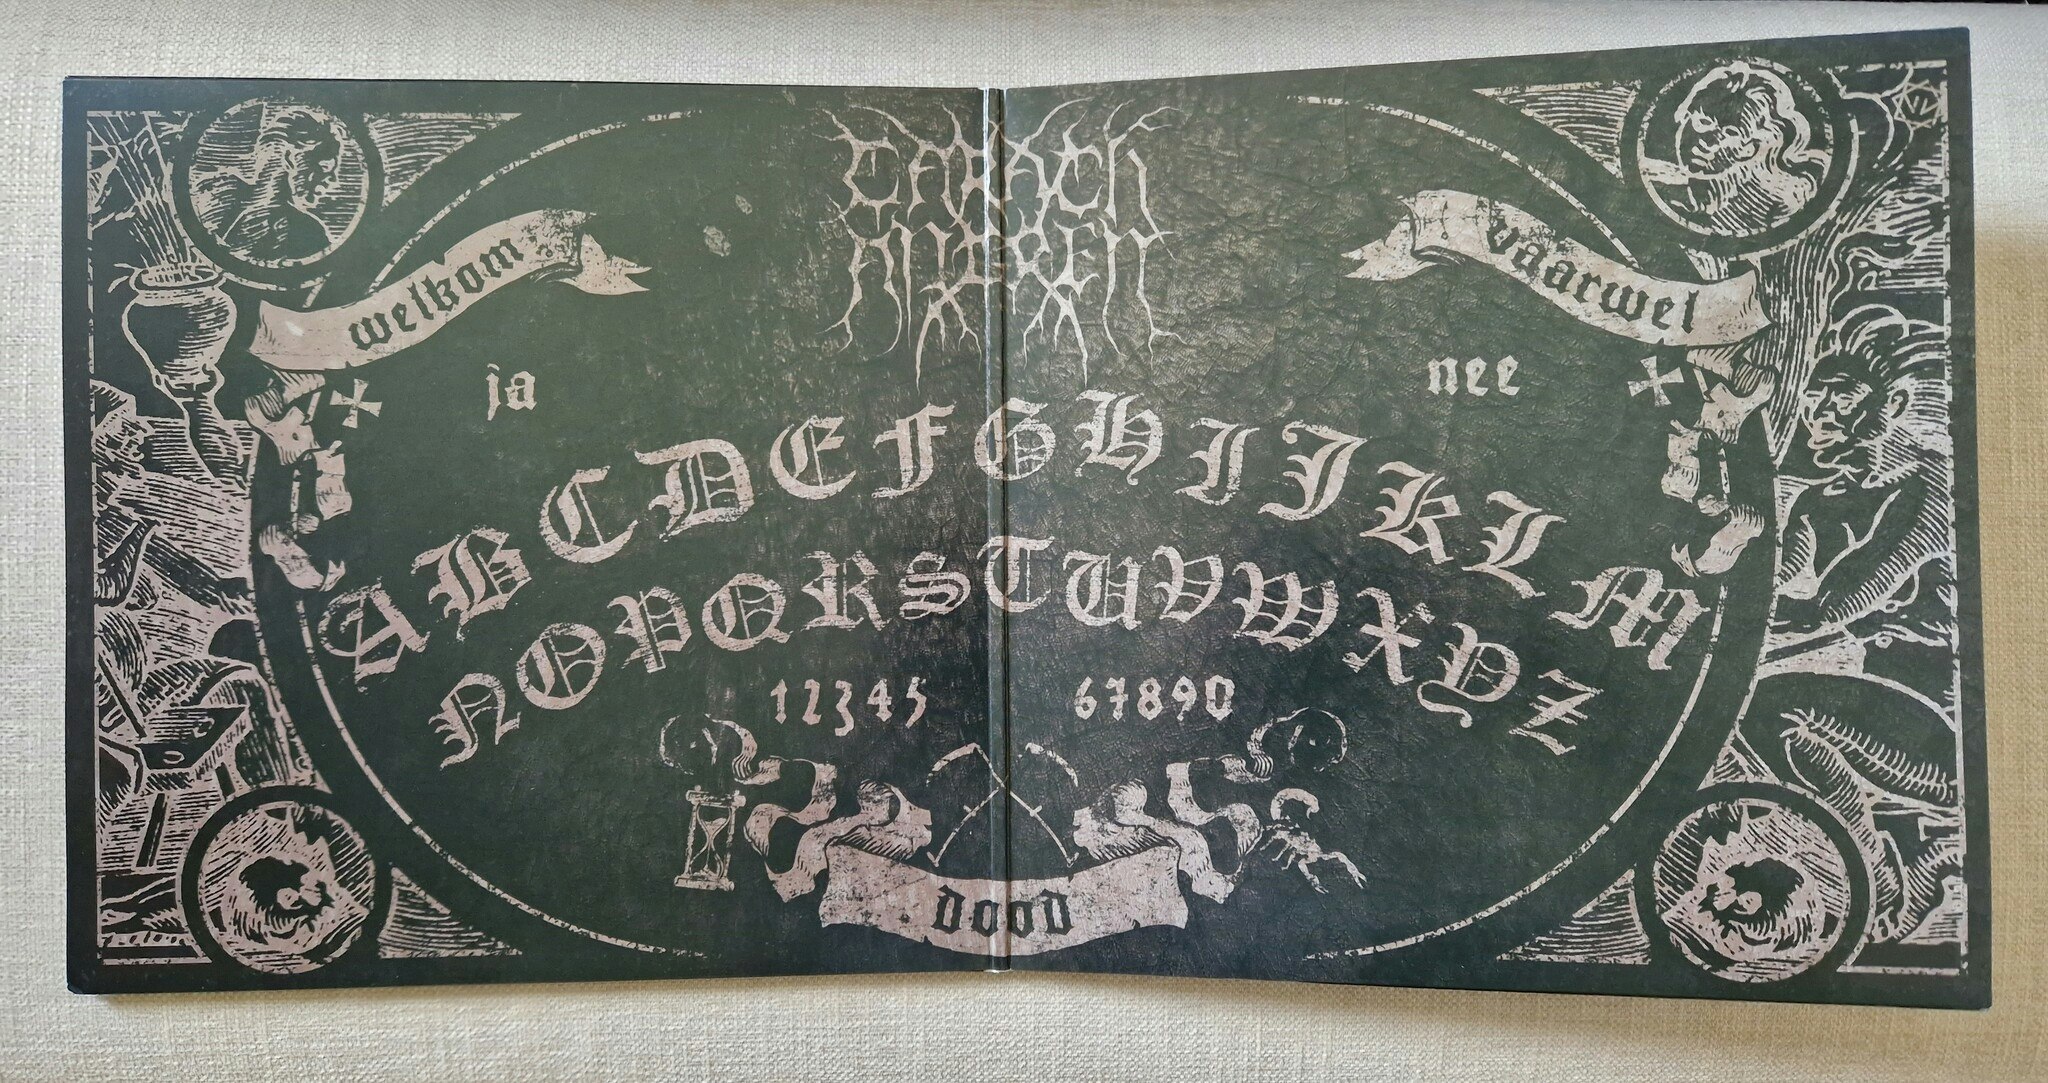 Carach Angren, This is no fairytale (Gold 300 copies). Vinyl LP